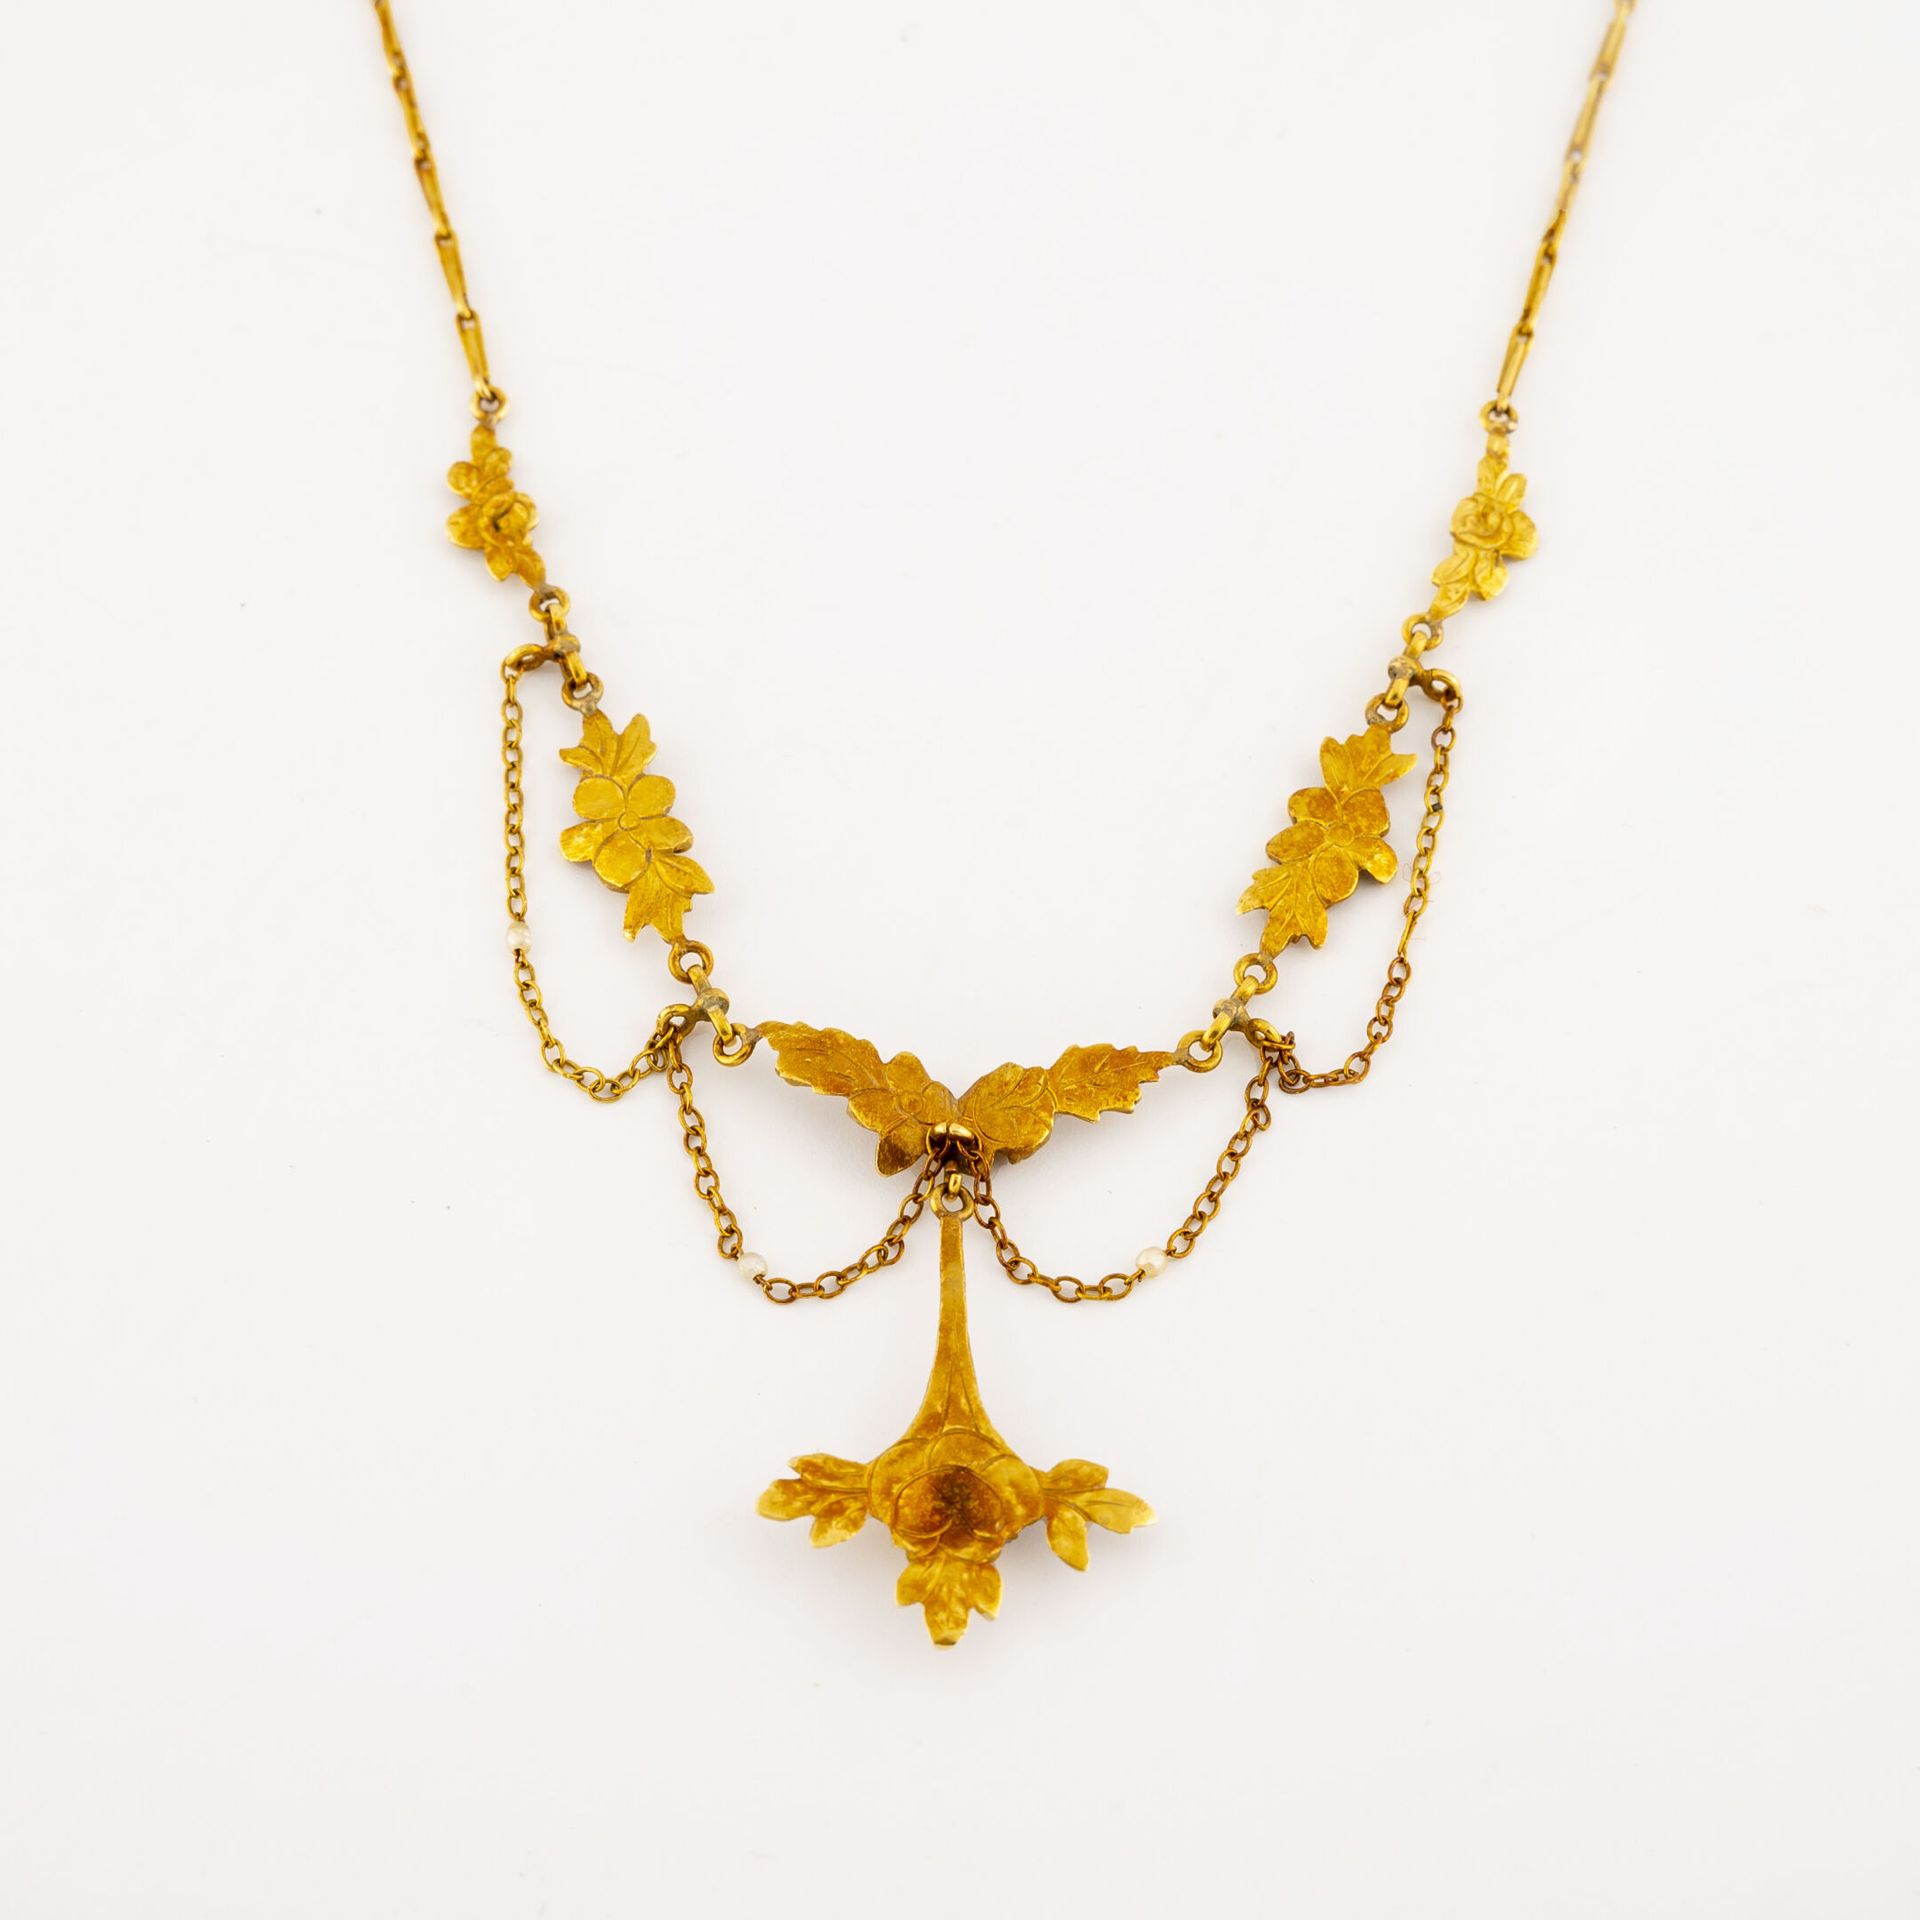 Null 黄金（750）项链，带花式网眼，领口有花朵图案，卷边链和白色珍珠种子。

弹簧环扣。

毛重：10.1克。- 长度：38厘米。

氧化，划痕。